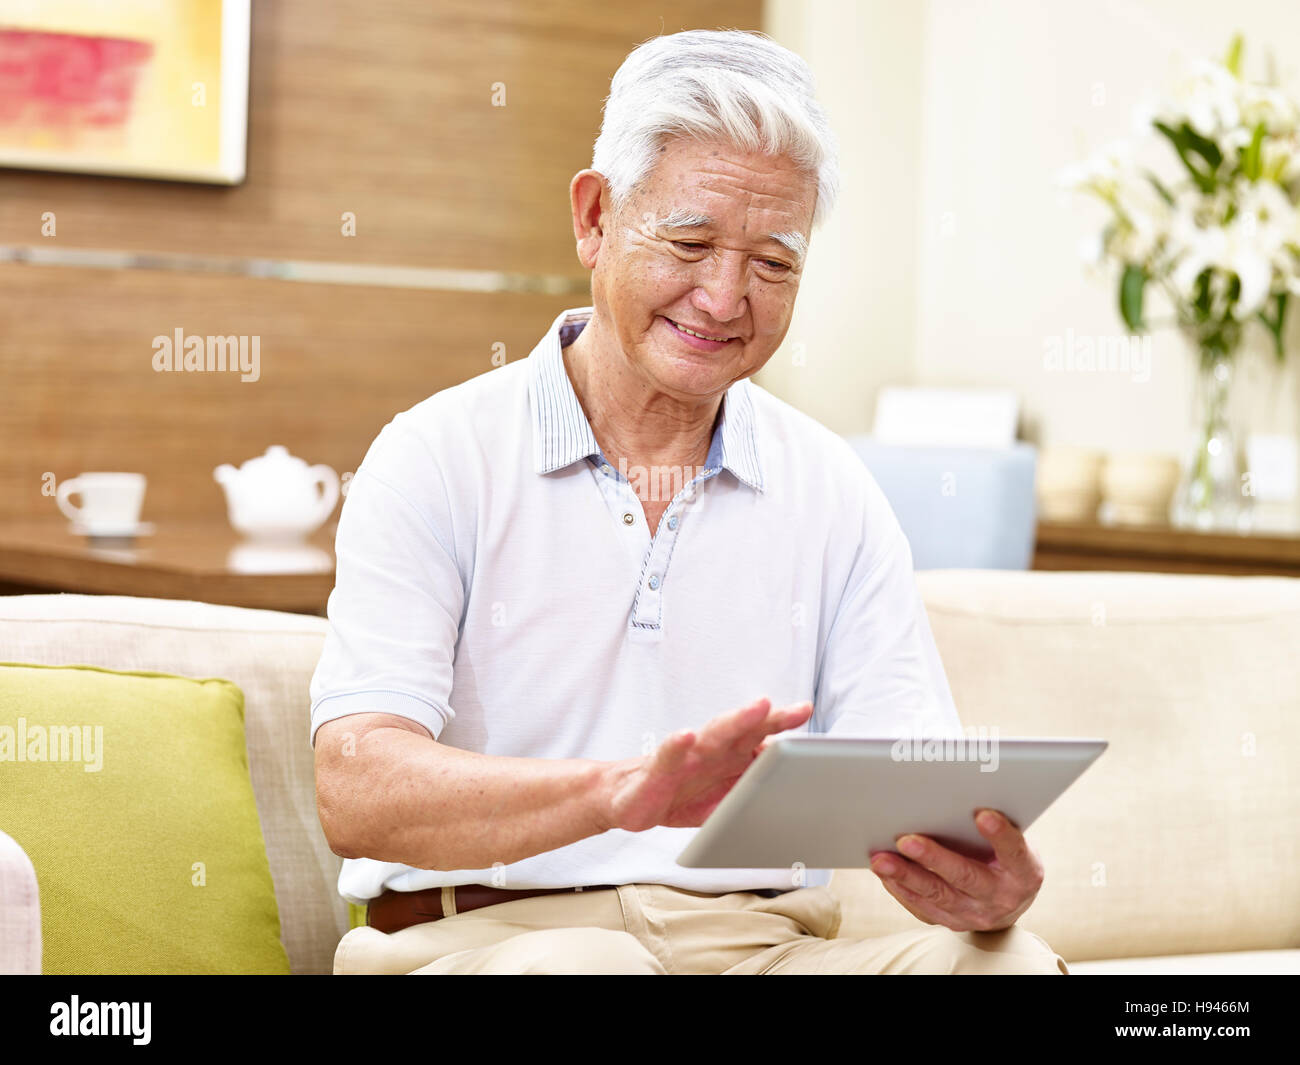 Active senior uomo asiatico seduto sul lettino usando computer tablet, rilassata, sorridente Foto Stock